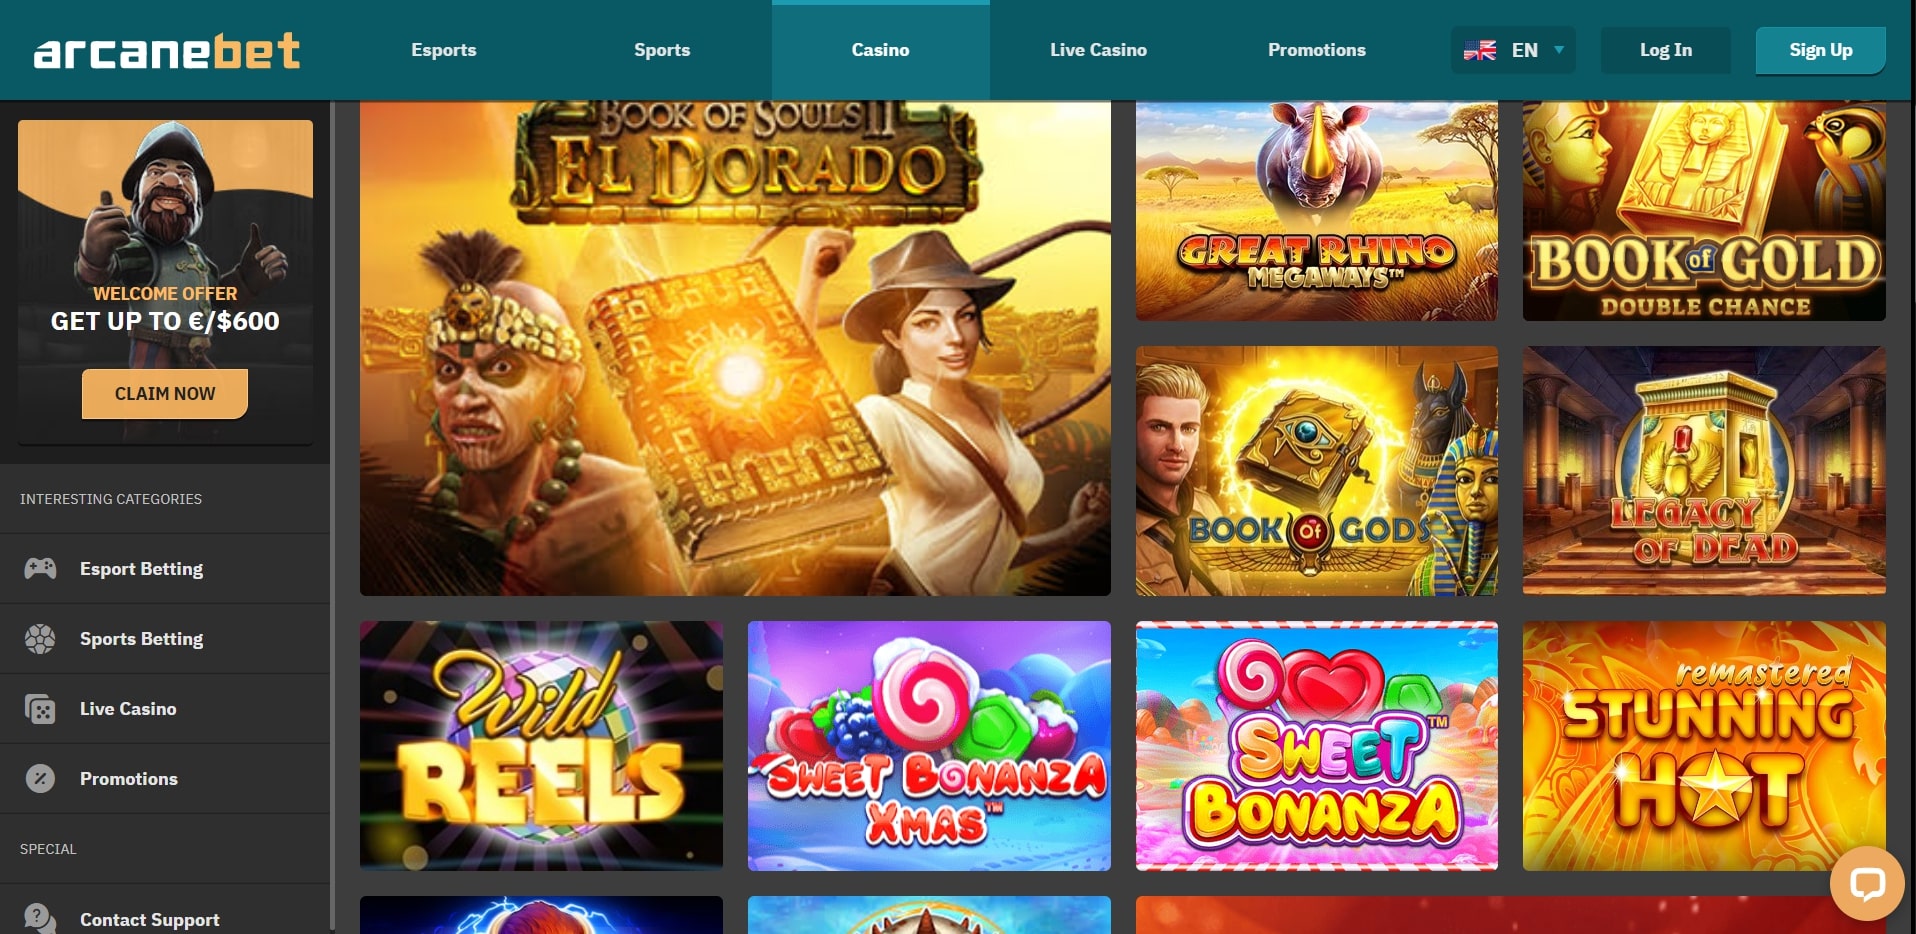 Arcanebet Casino Games